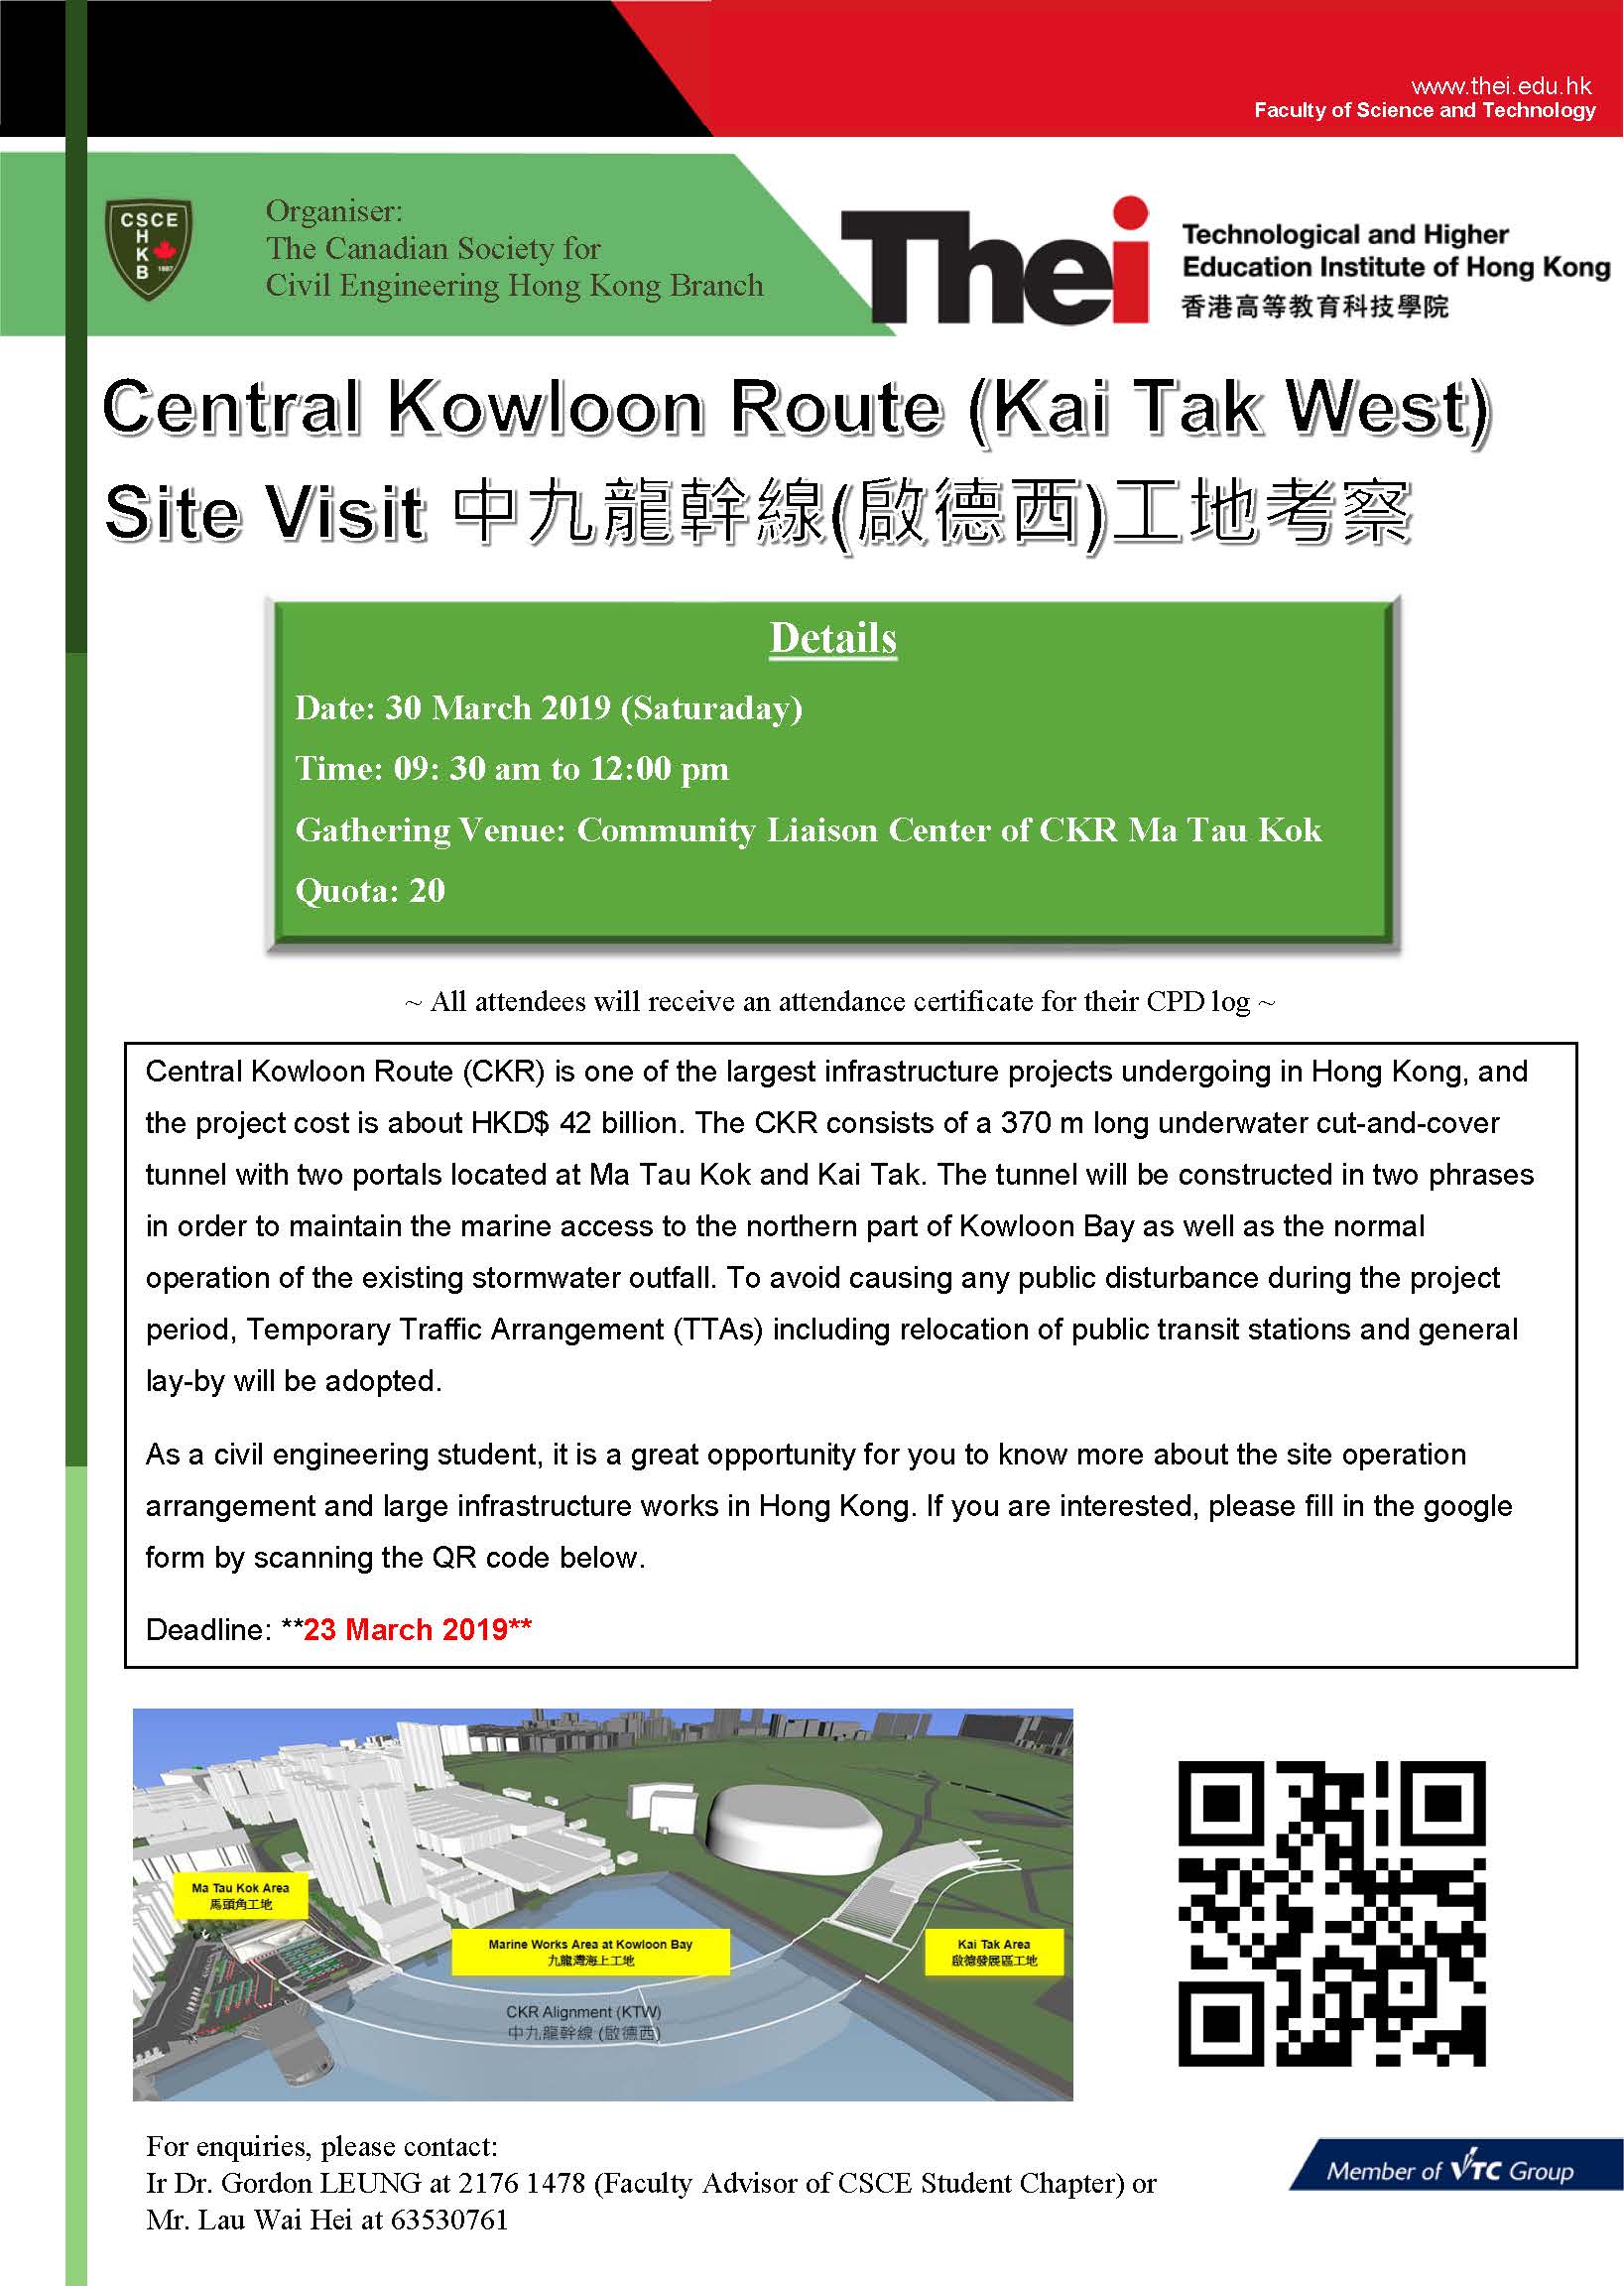 Central Kowloon Route (Kai Tak West) Site Visit